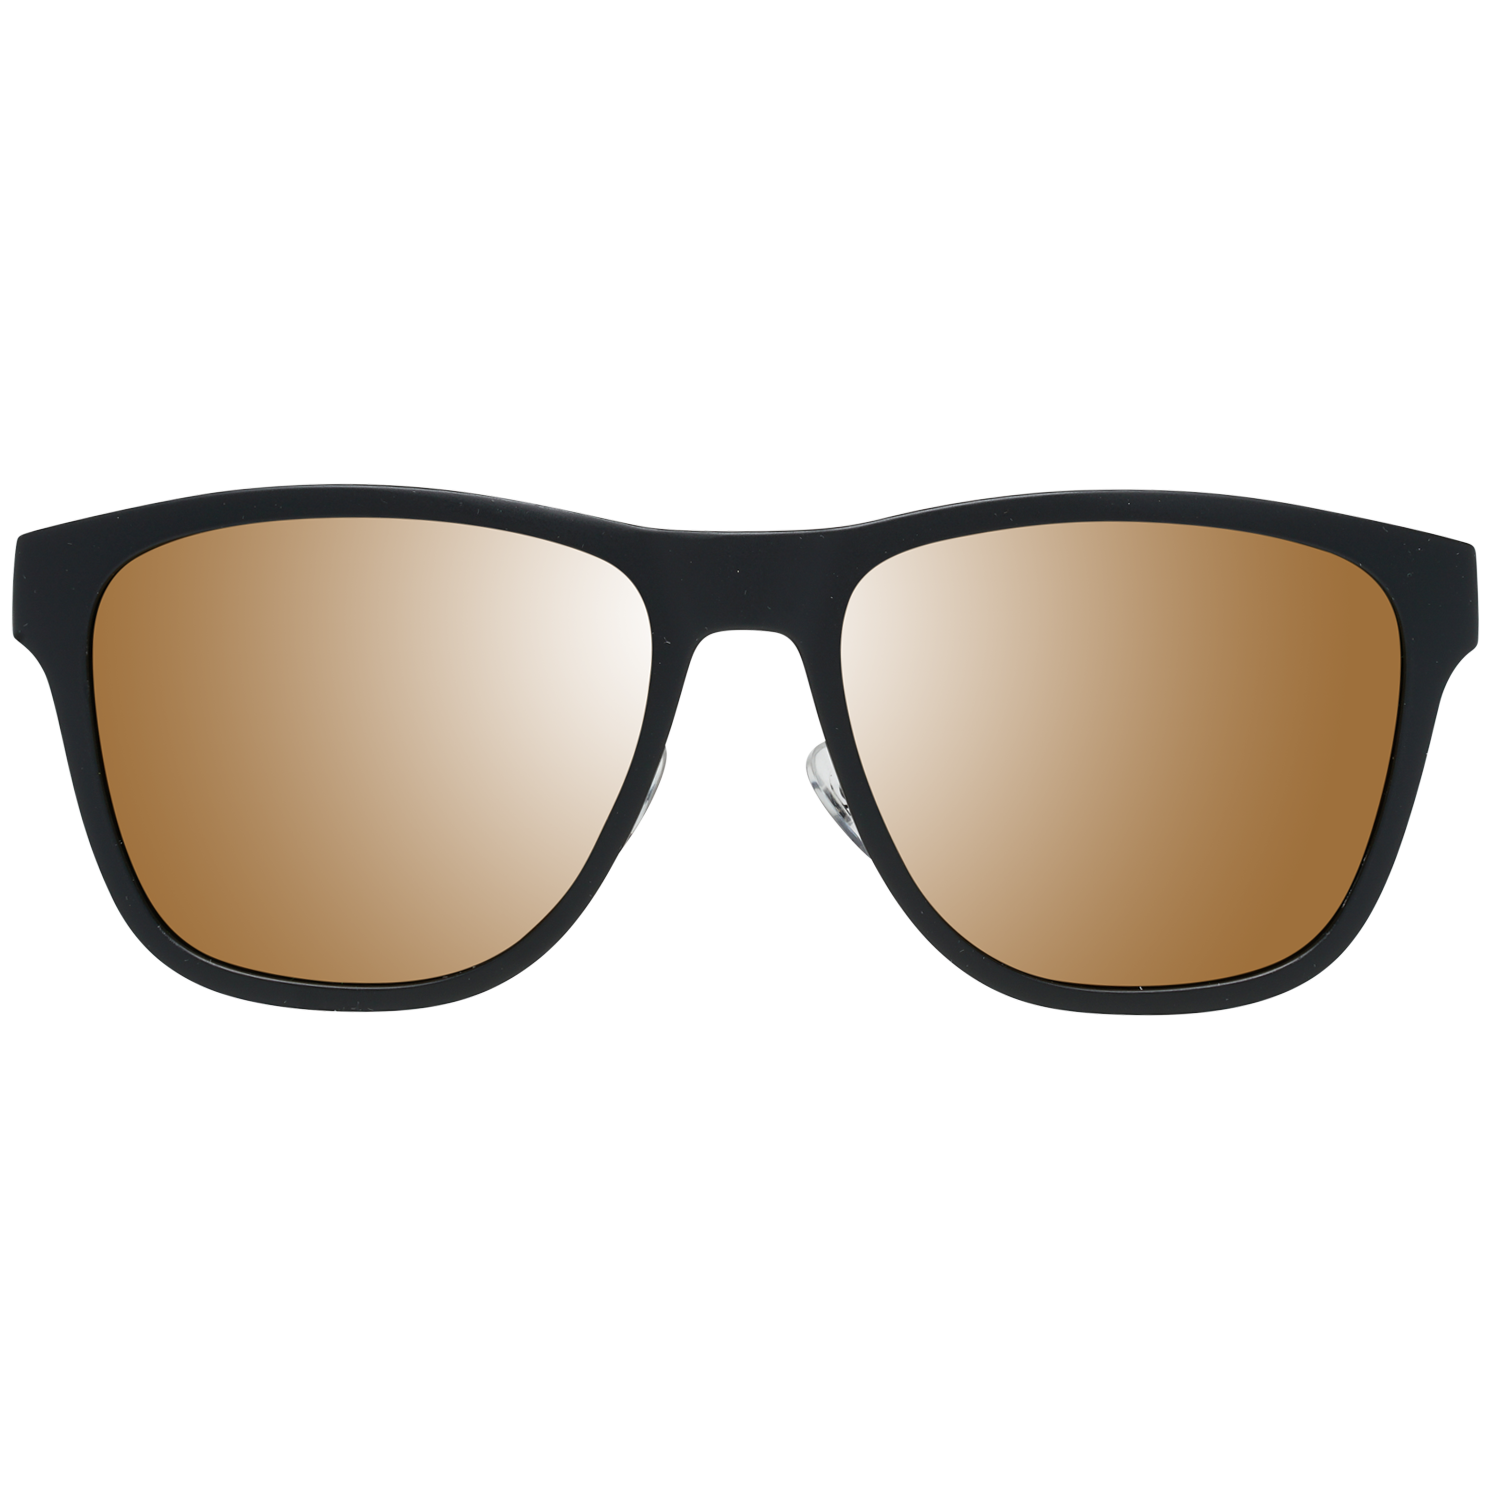 Benetton Sunglasses Benetton Sunglasses BE5013 001 56 Eyeglasses Eyewear UK USA Australia 